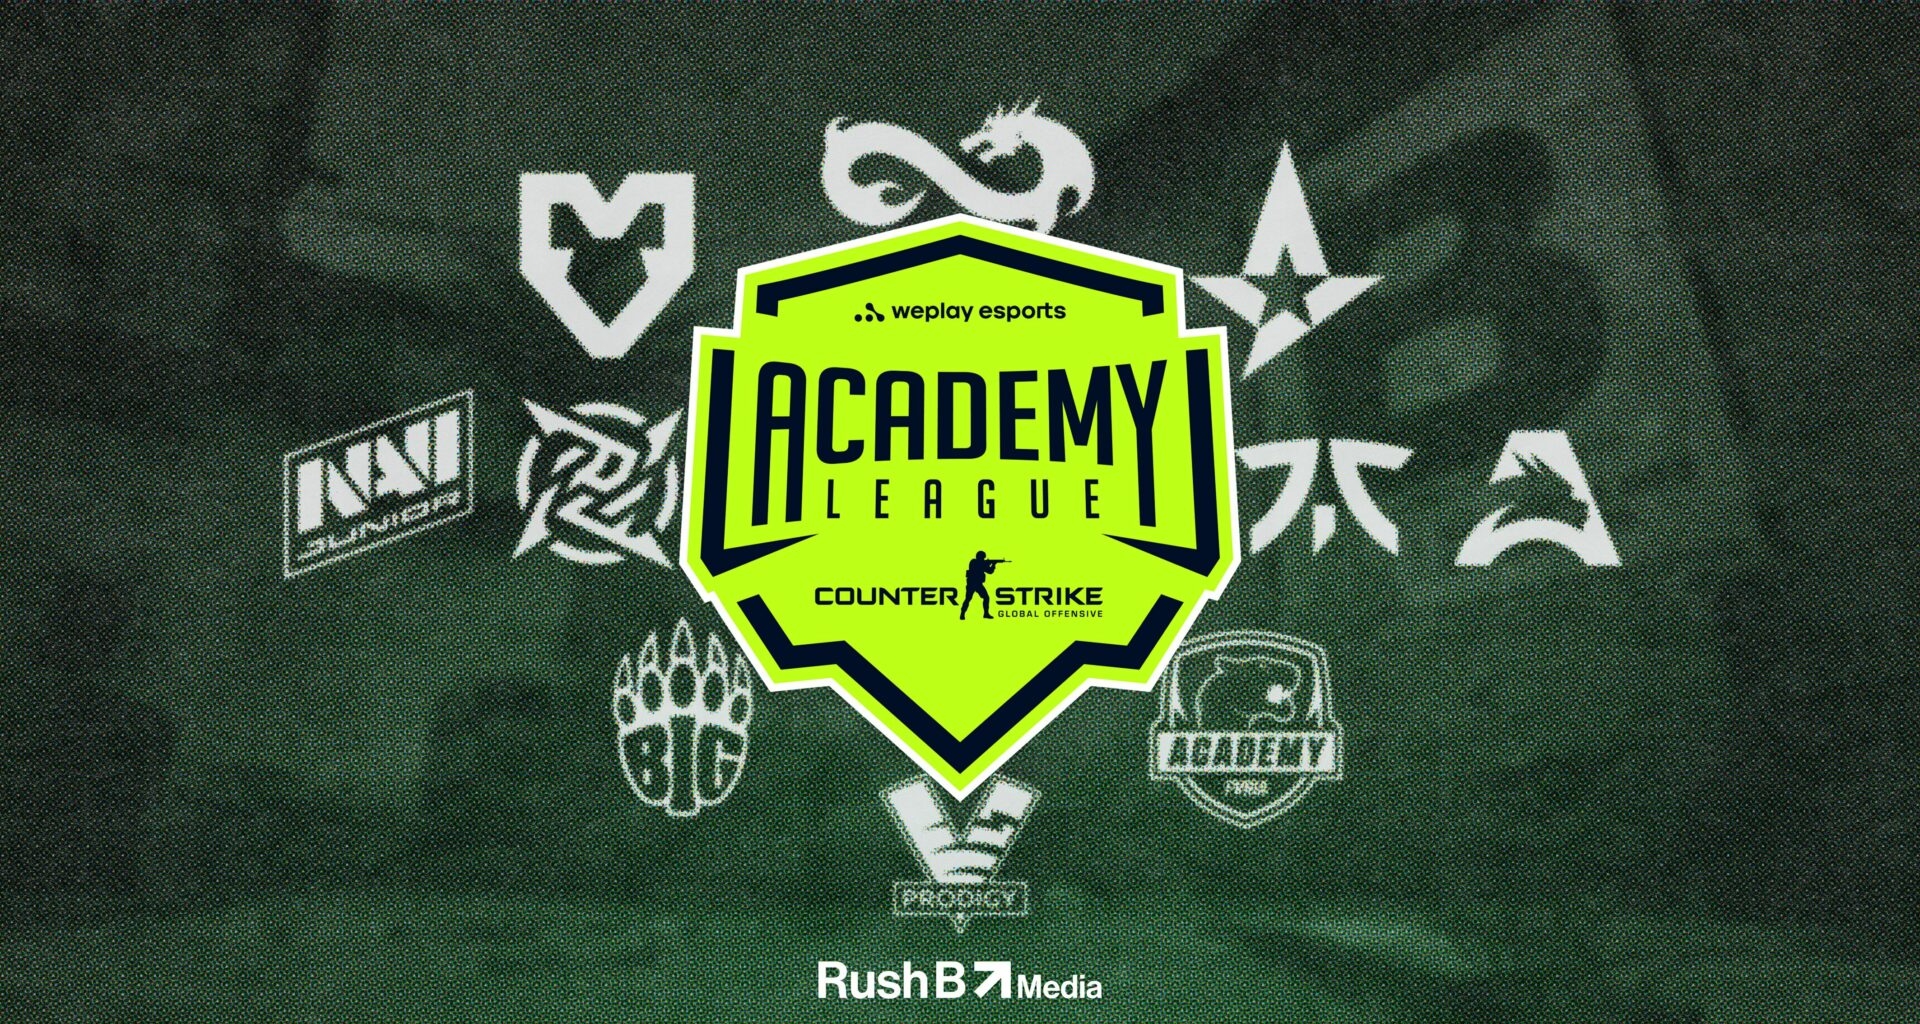 Team spirit aurora. Team Spirit Academy. CS go Team Academy. Donk Team Spirit Academy. Anti-og.